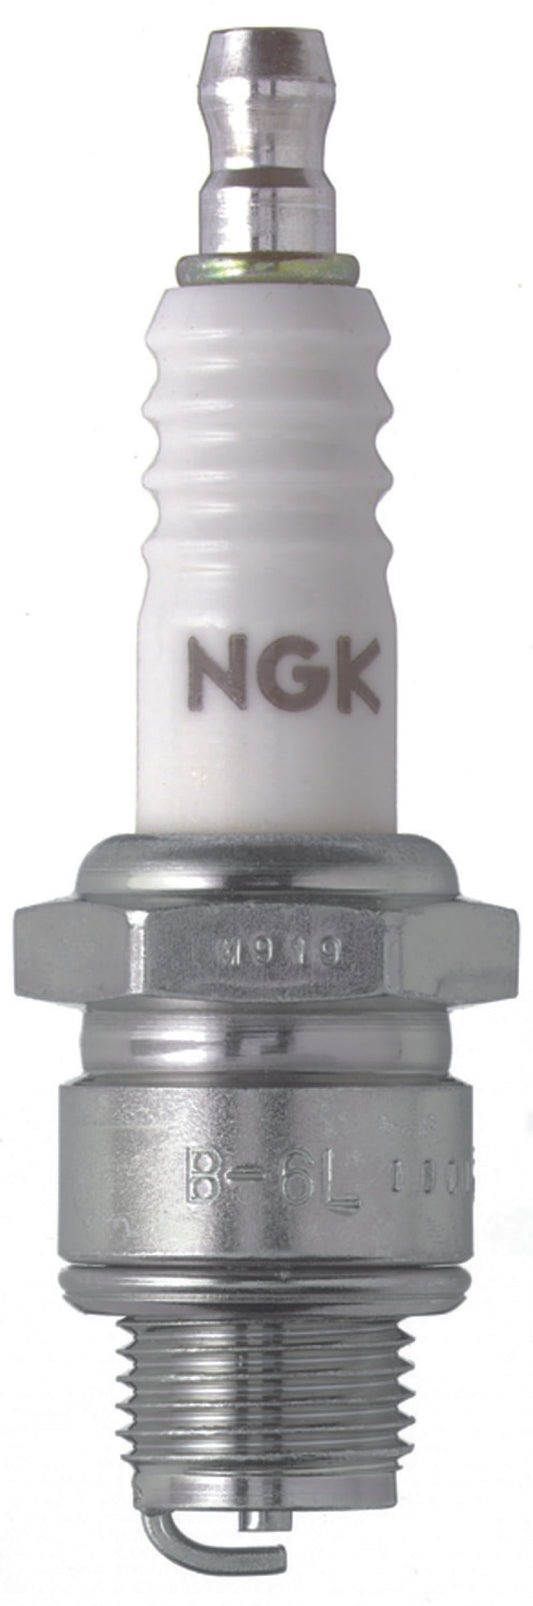 NGK Standard Spark Plug Box of 10 (B-6L)